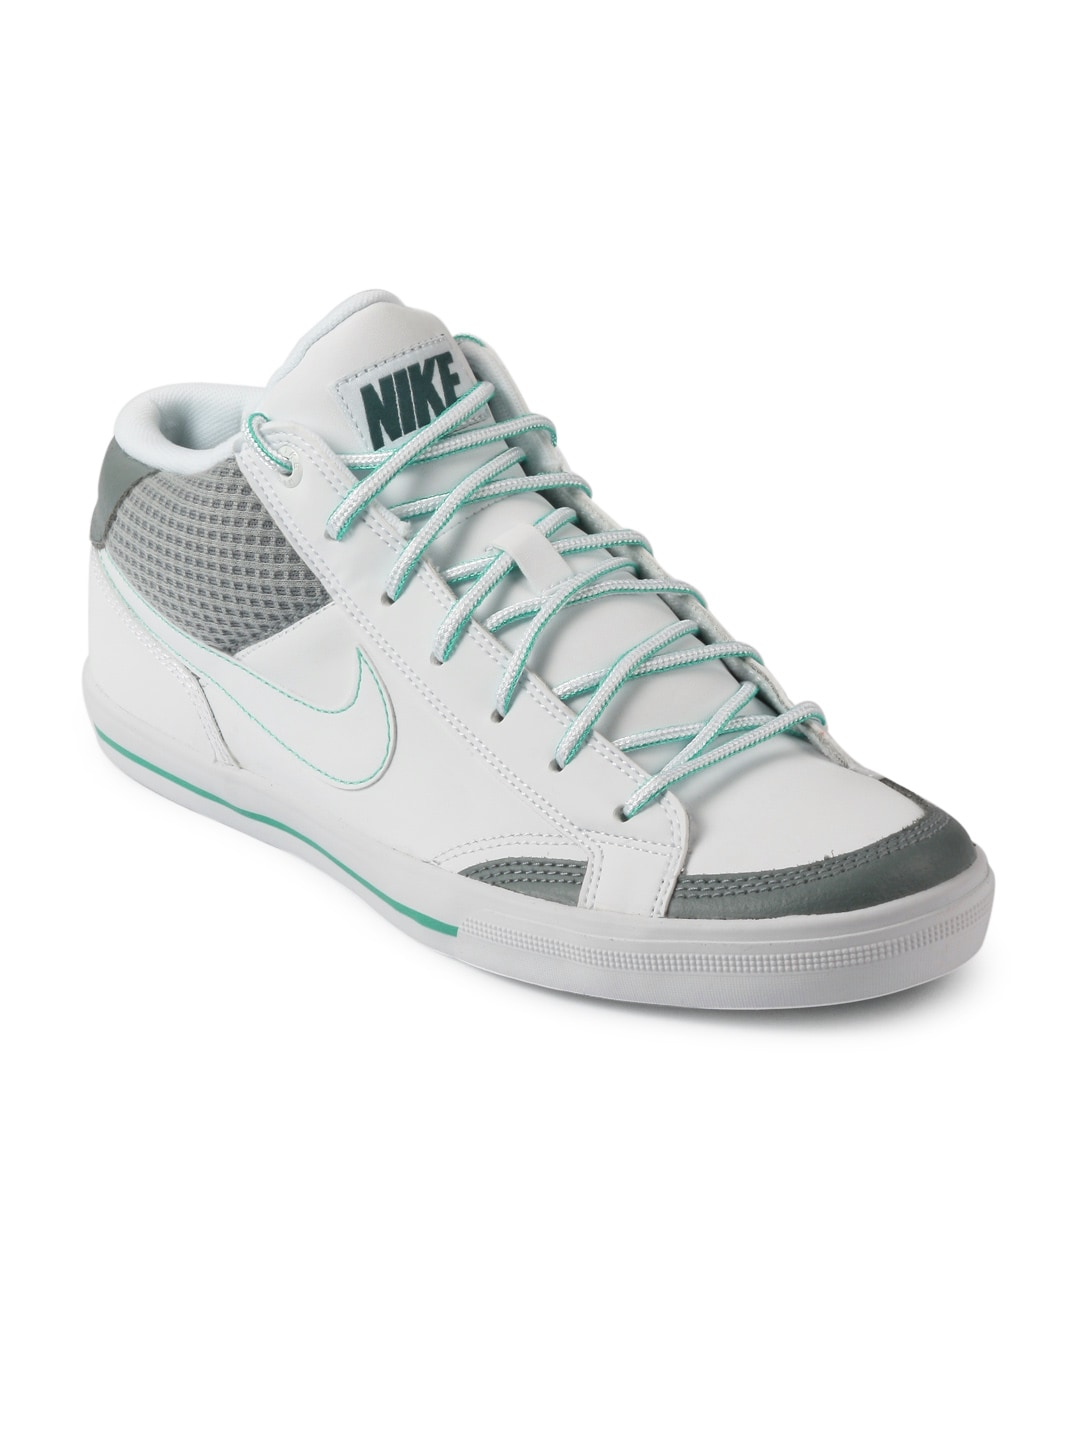 Nike Men Capri II Mid White Casual Shoes